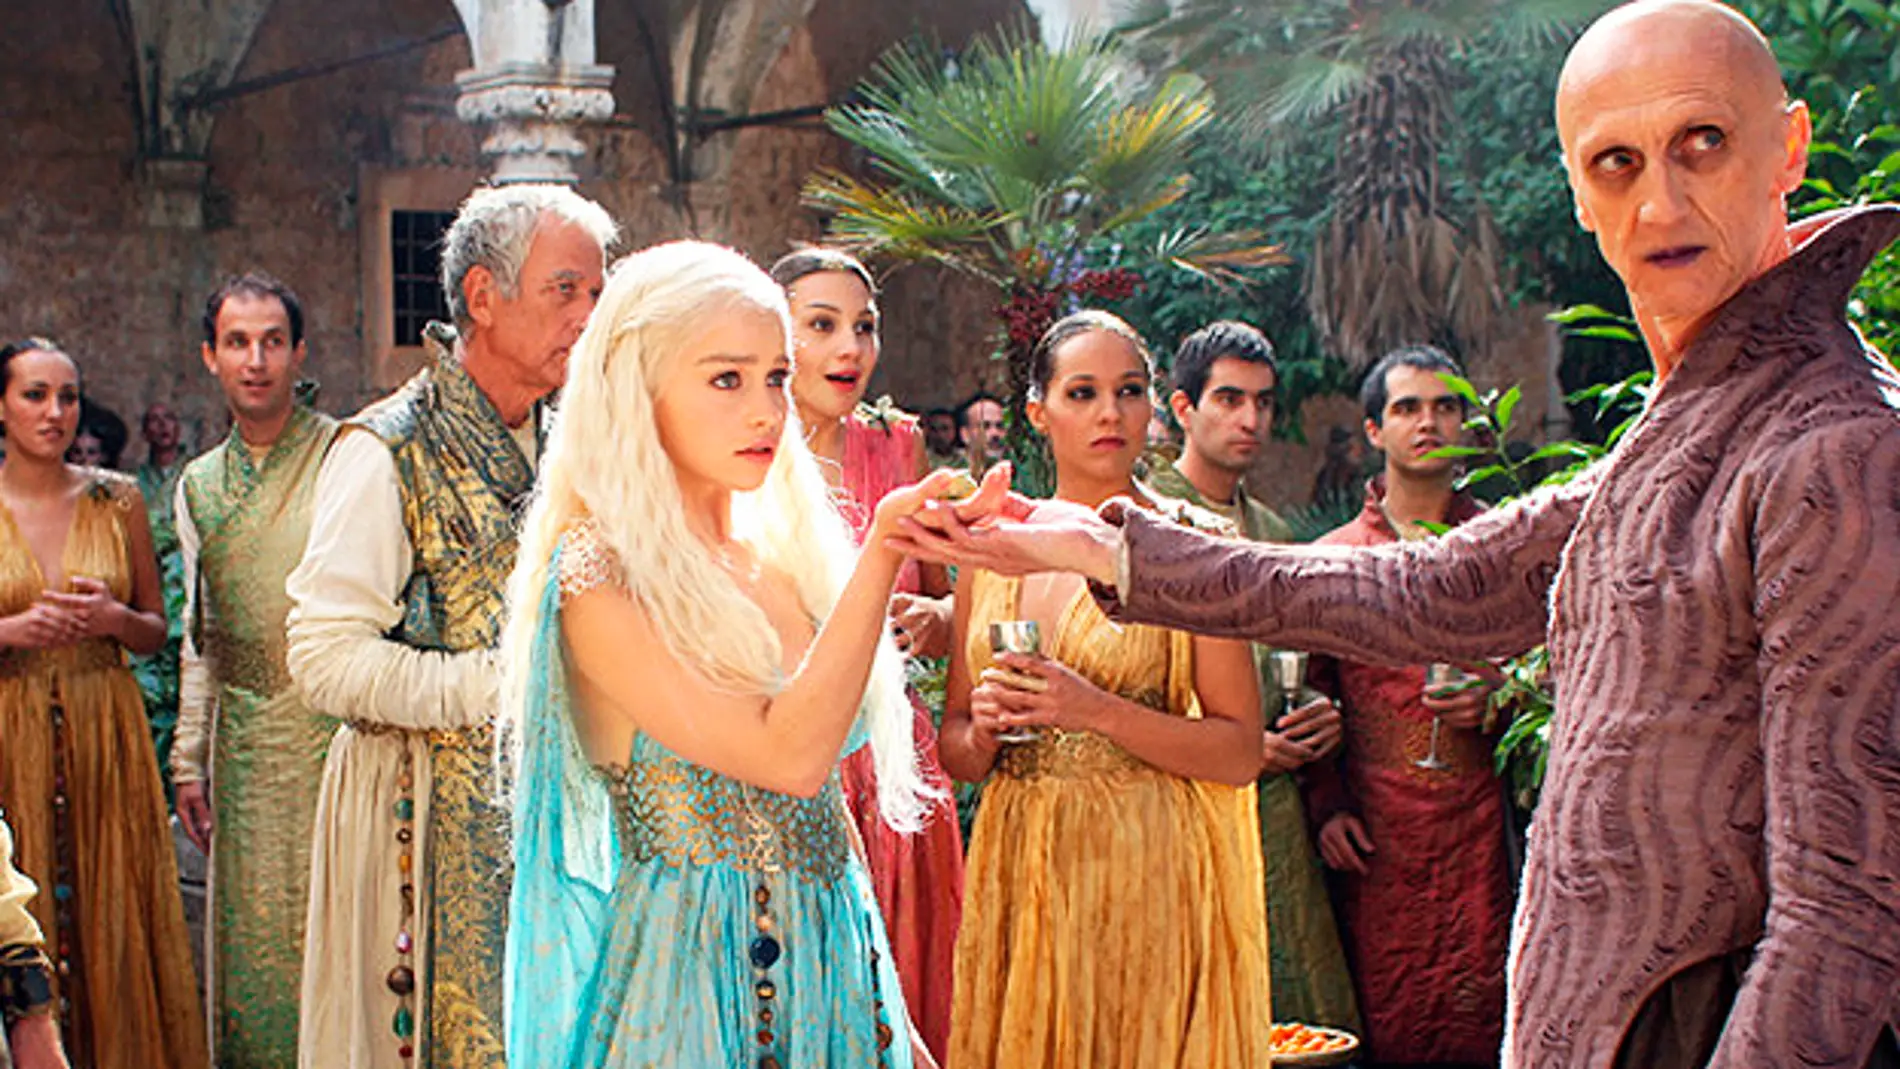 Daenerys Targaryen saluda a un mago en Qarth